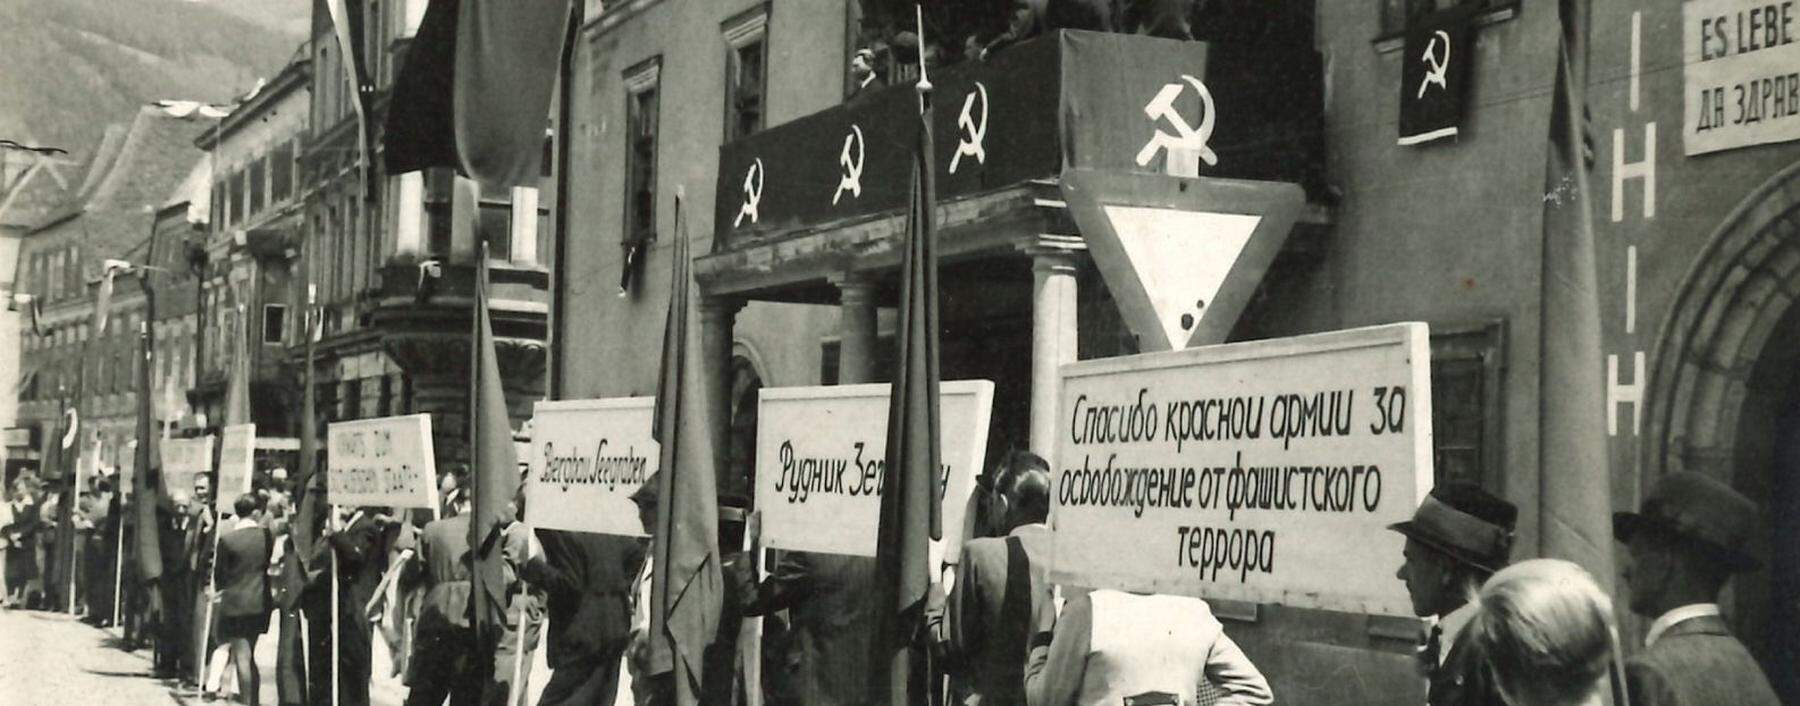 Befreiungsfeier in Leoben, Juni 1945.